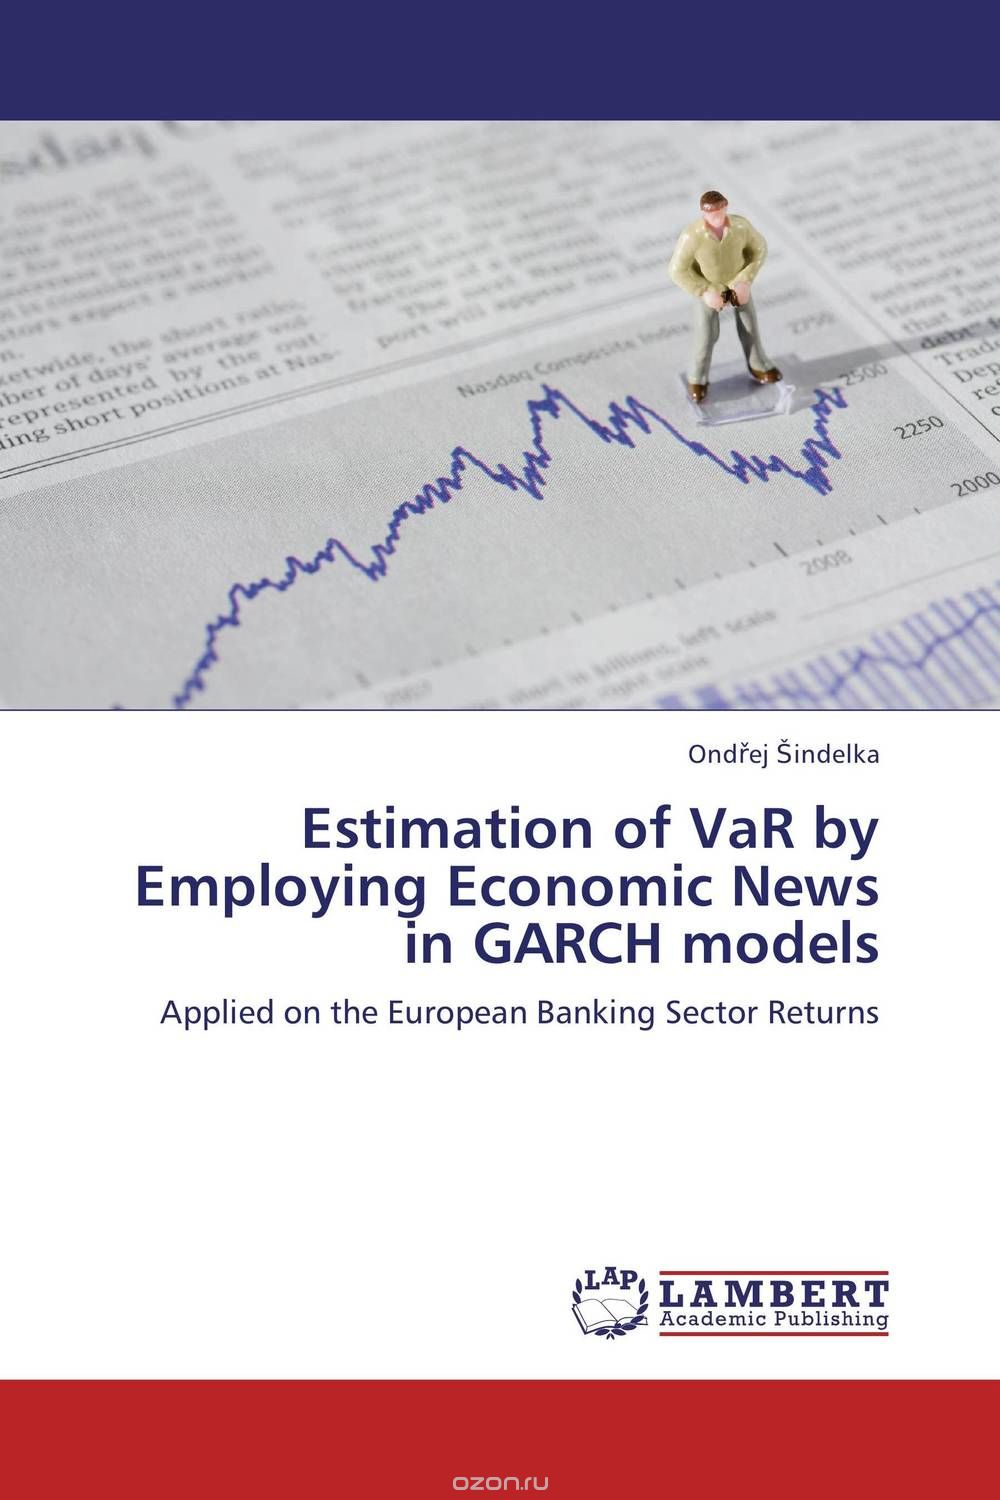 Скачать книгу "Estimation of VaR by Employing Economic News in GARCH models"